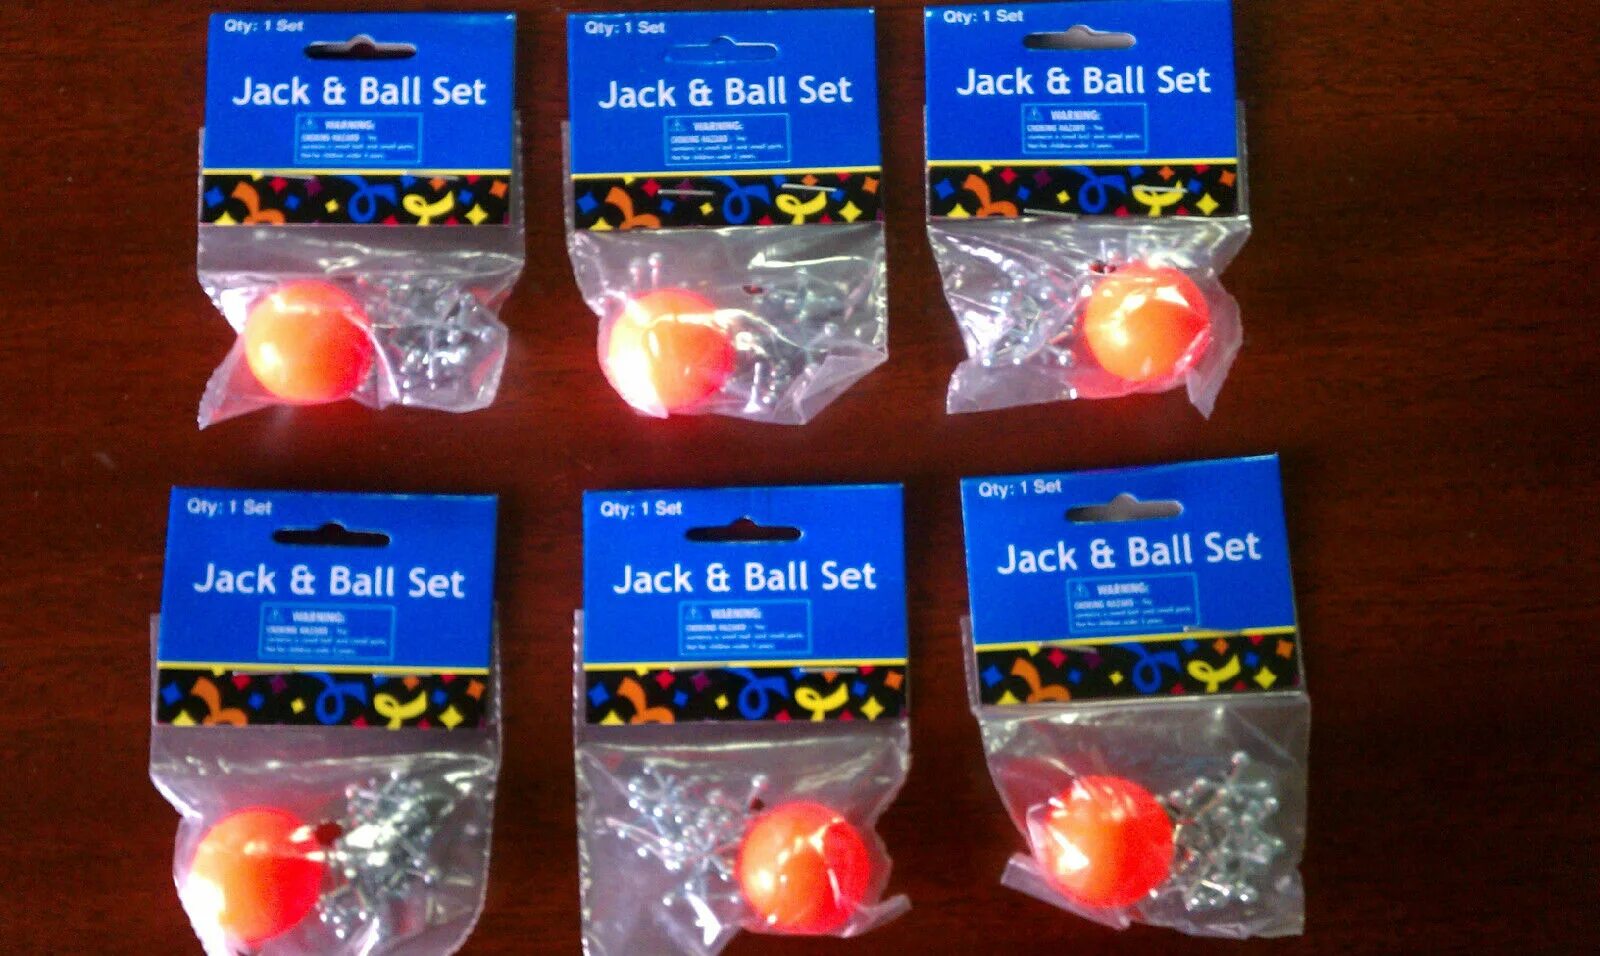 Jack balls